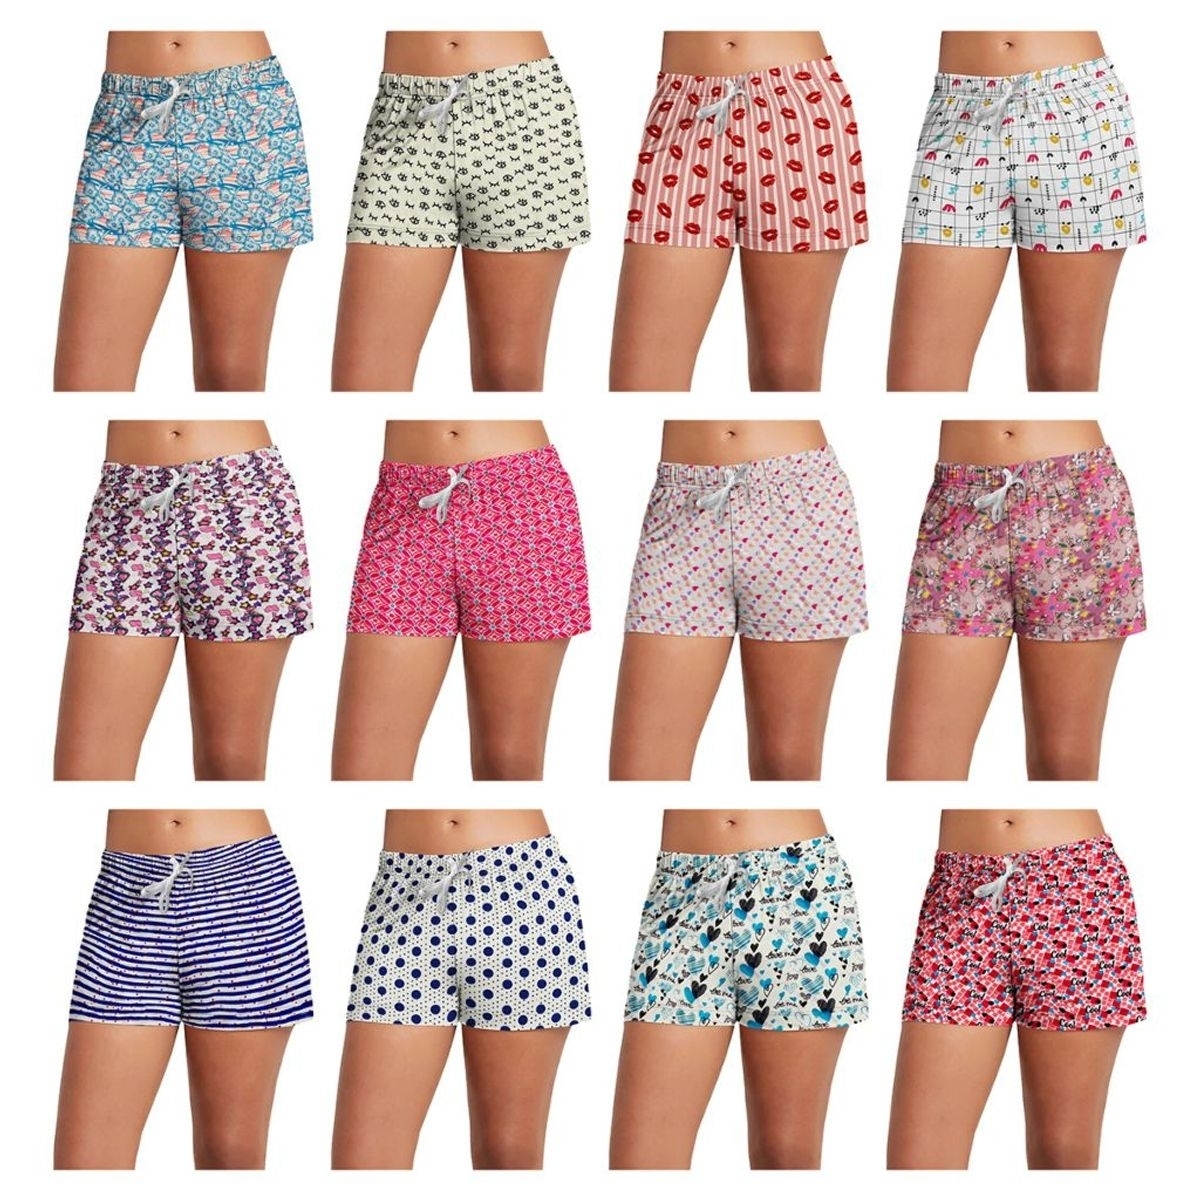 5-Pack: Women's Super-Soft Lightweight Fun Printed Comfy Lounge Bottom Pajama Shorts W/ Drawstring - Large, Shapes